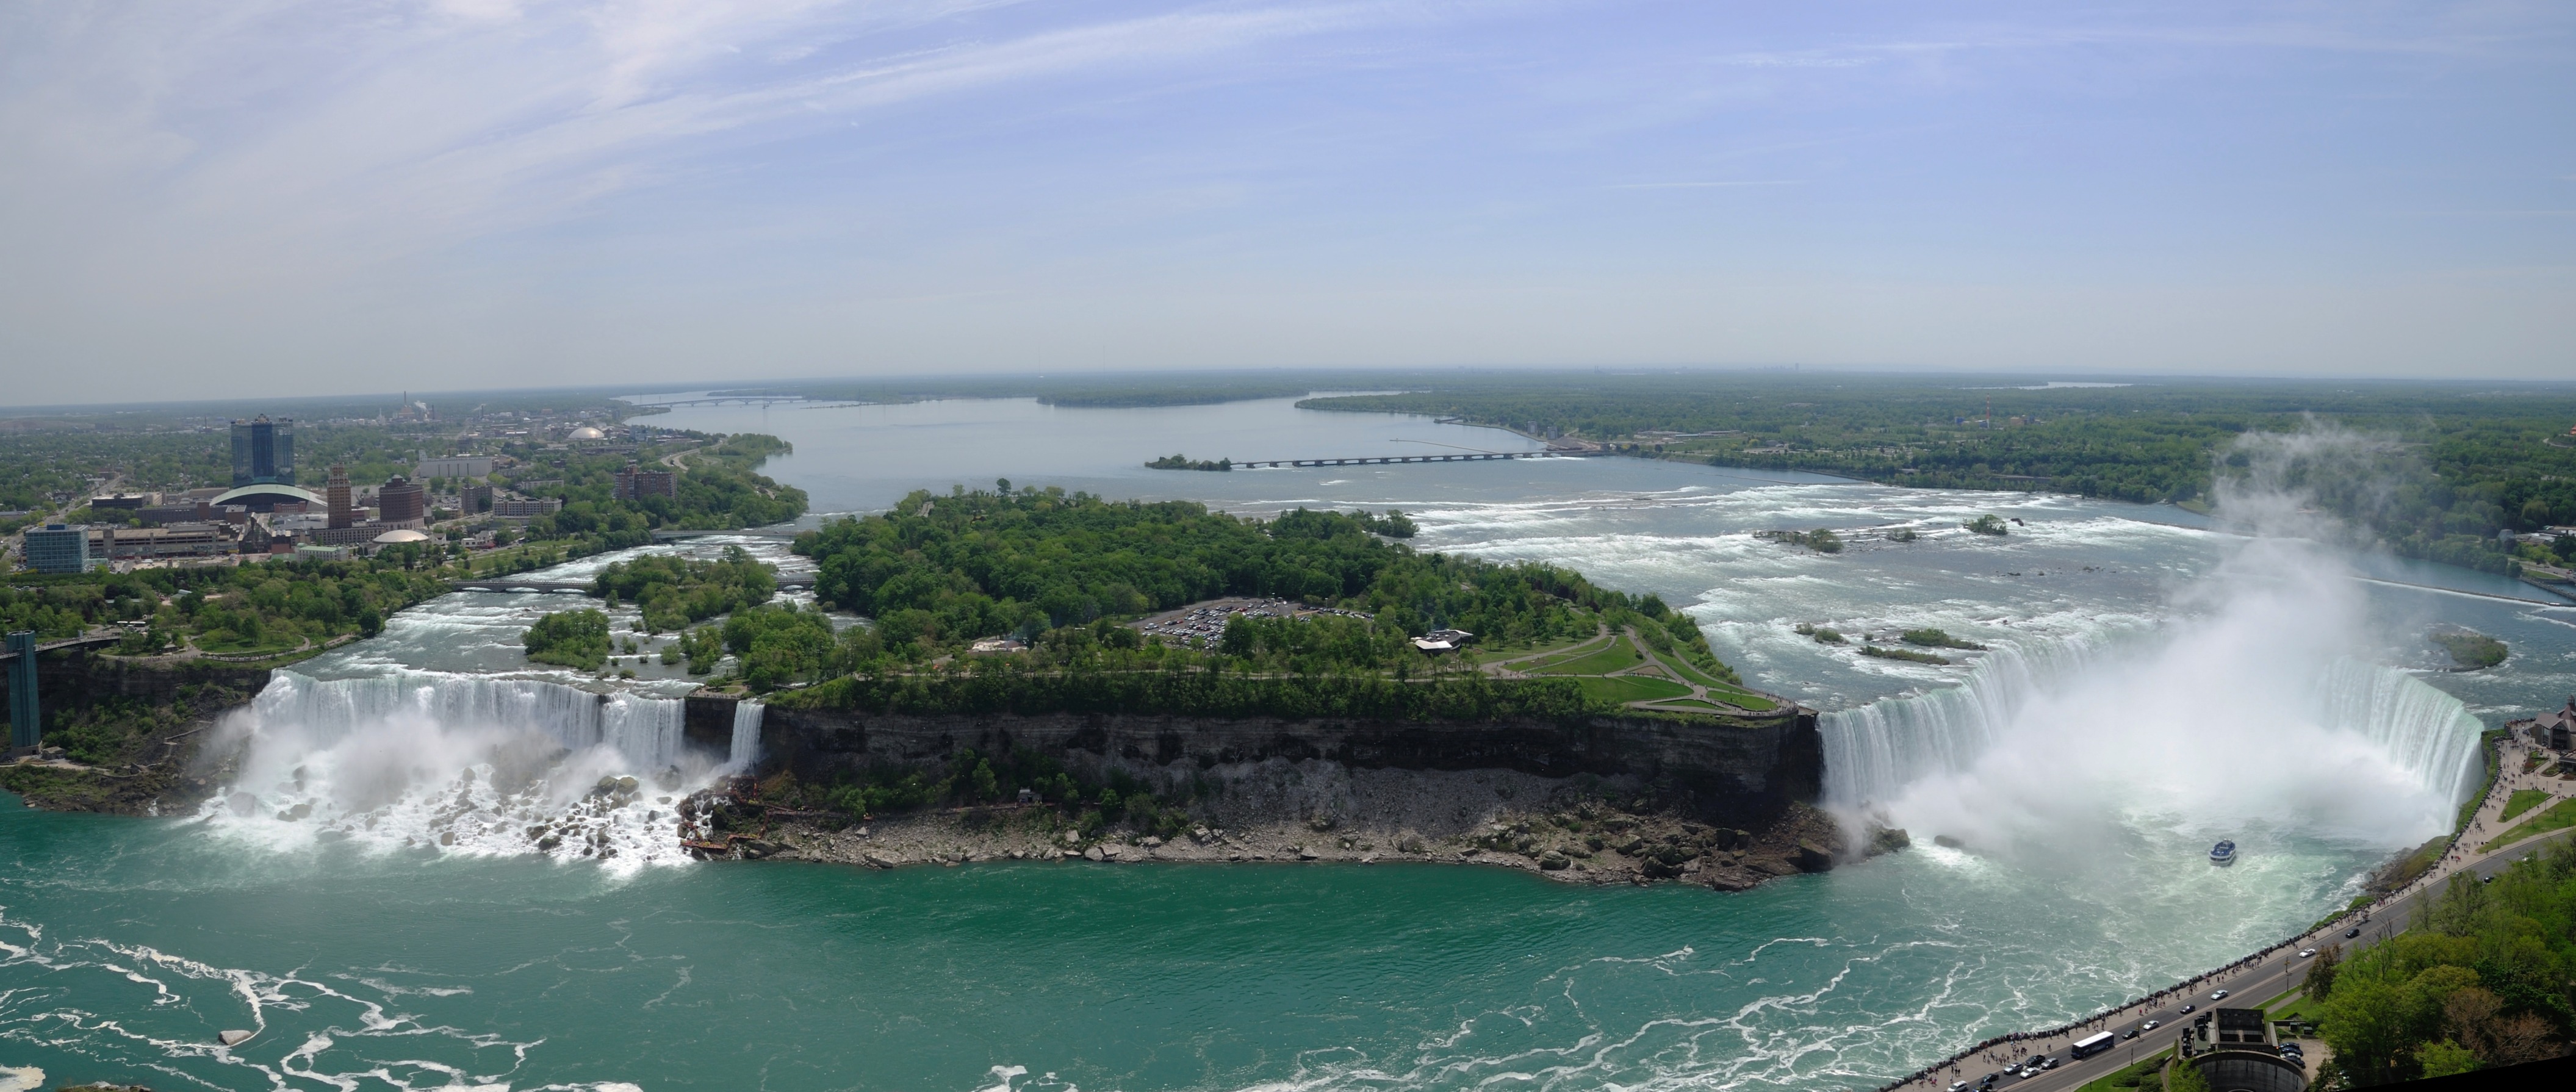 Niagara Falls - ON - Niagarafälle